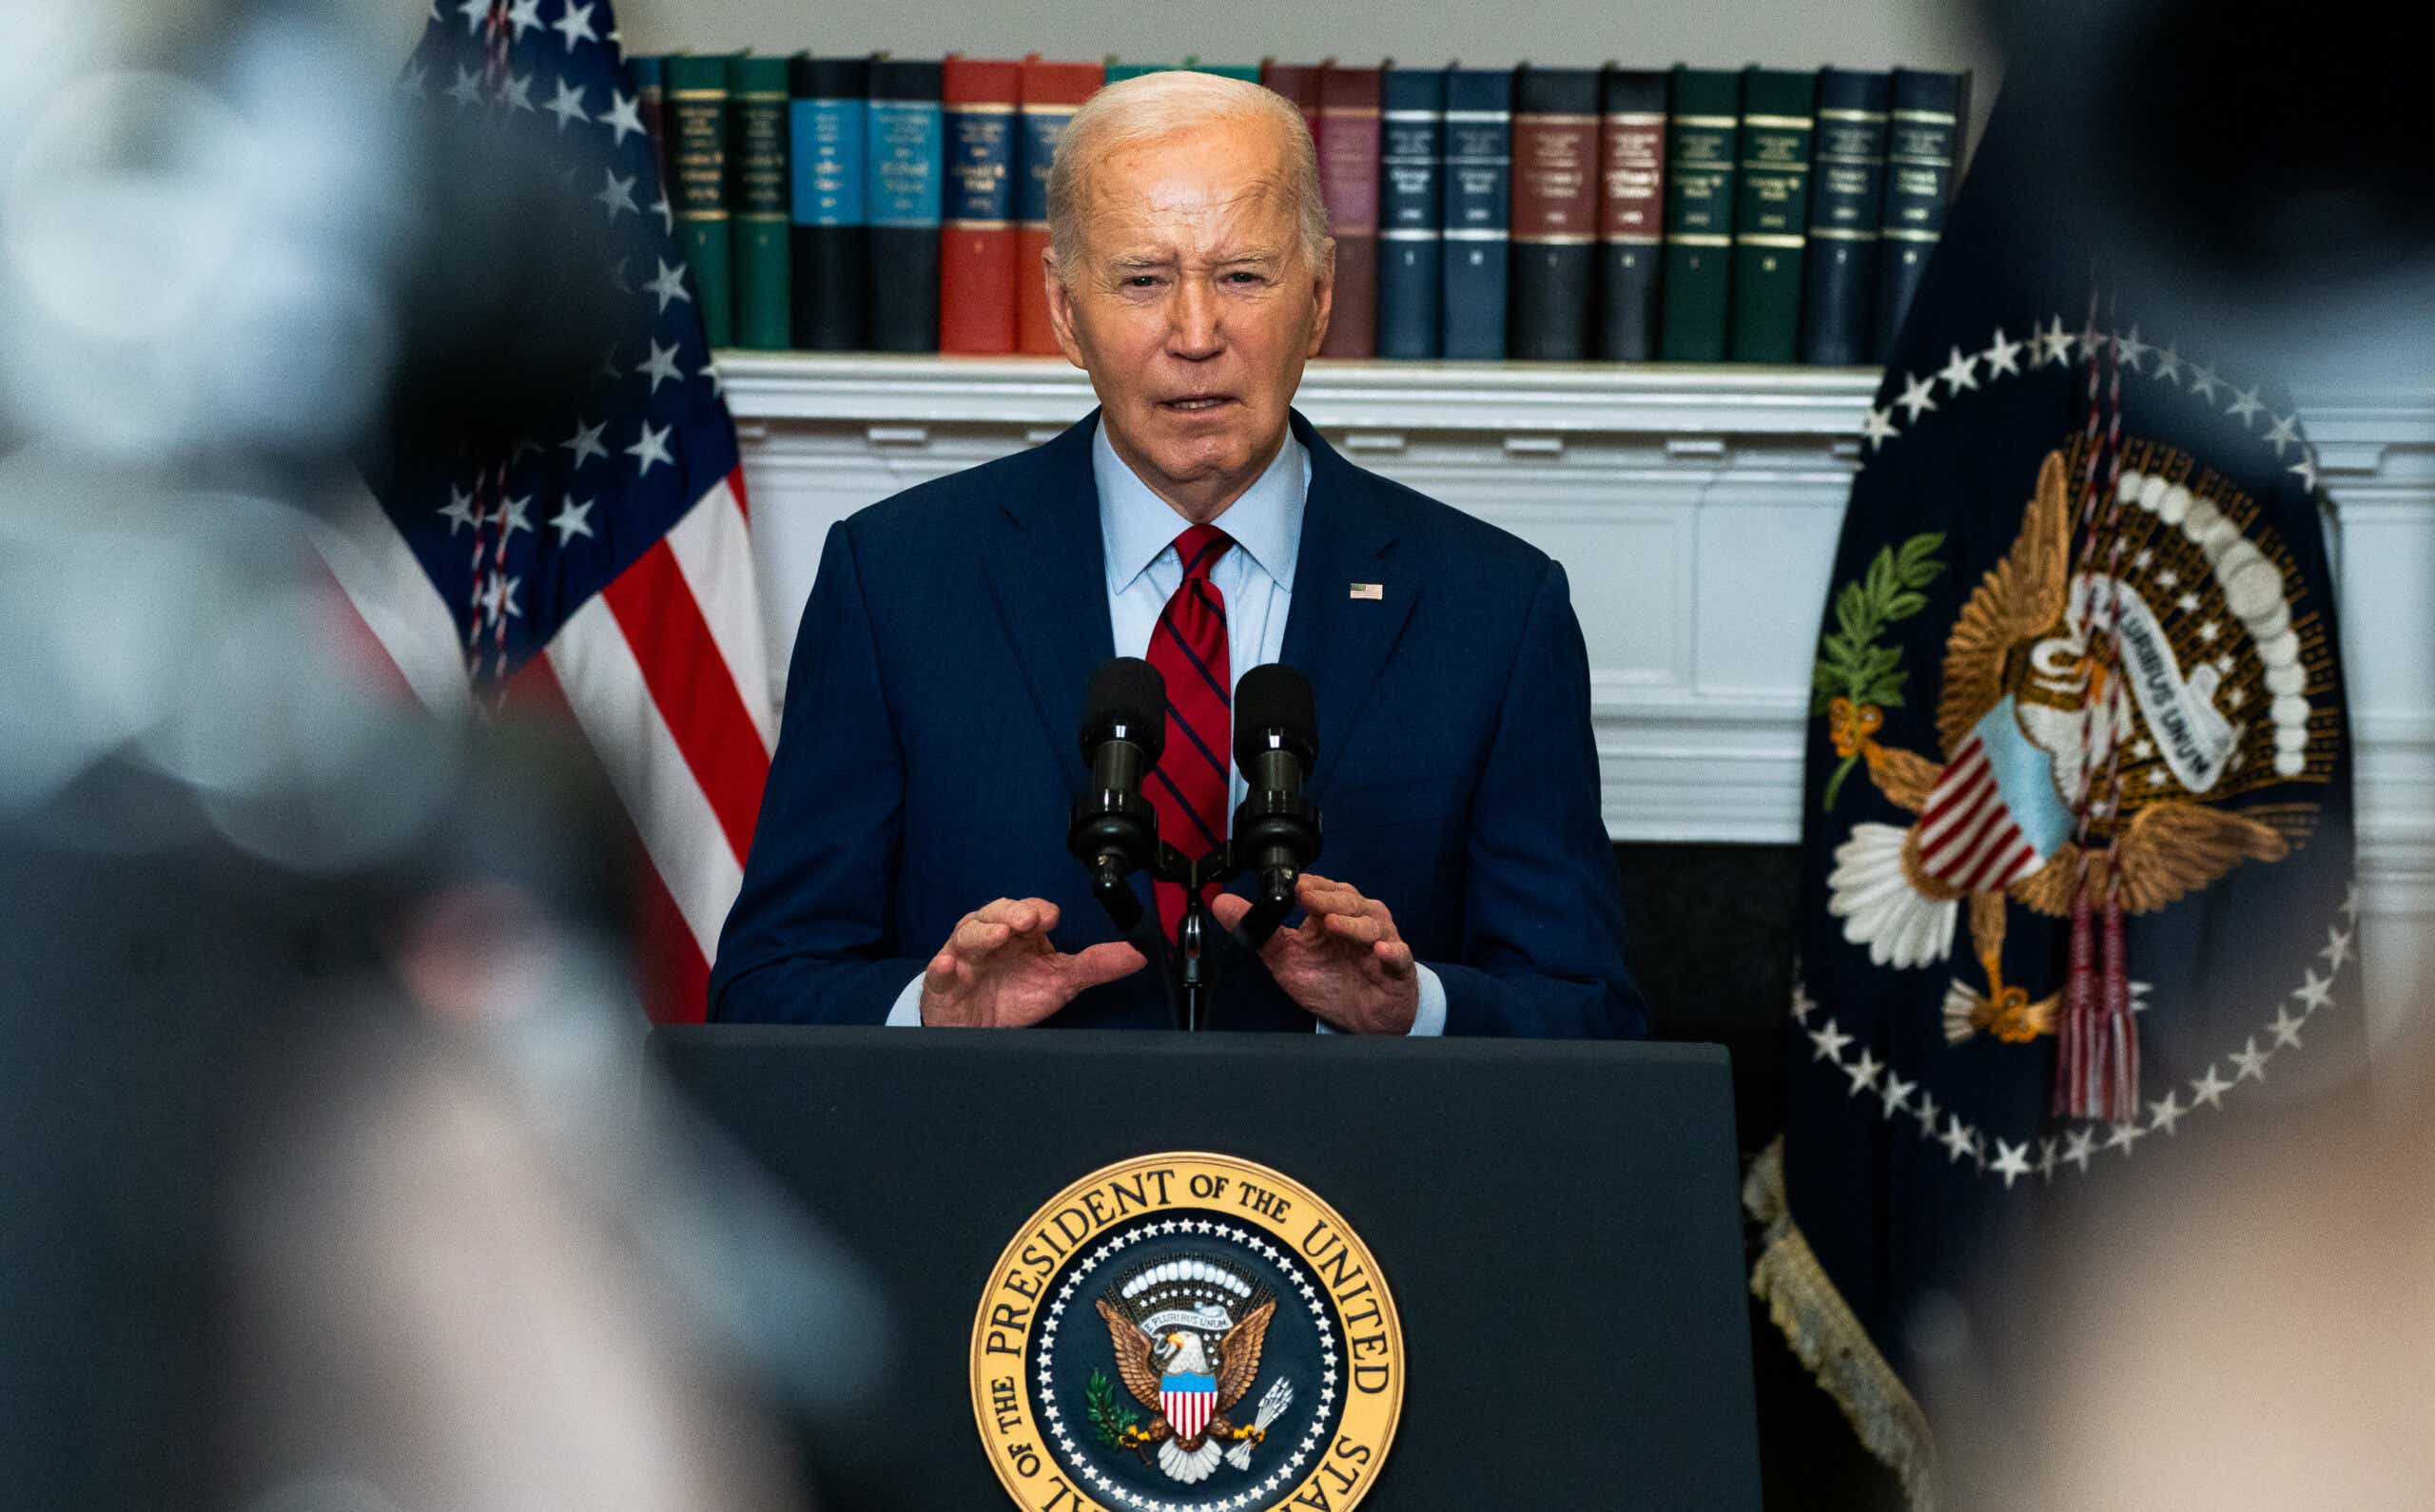 President Biden speaking on podium.